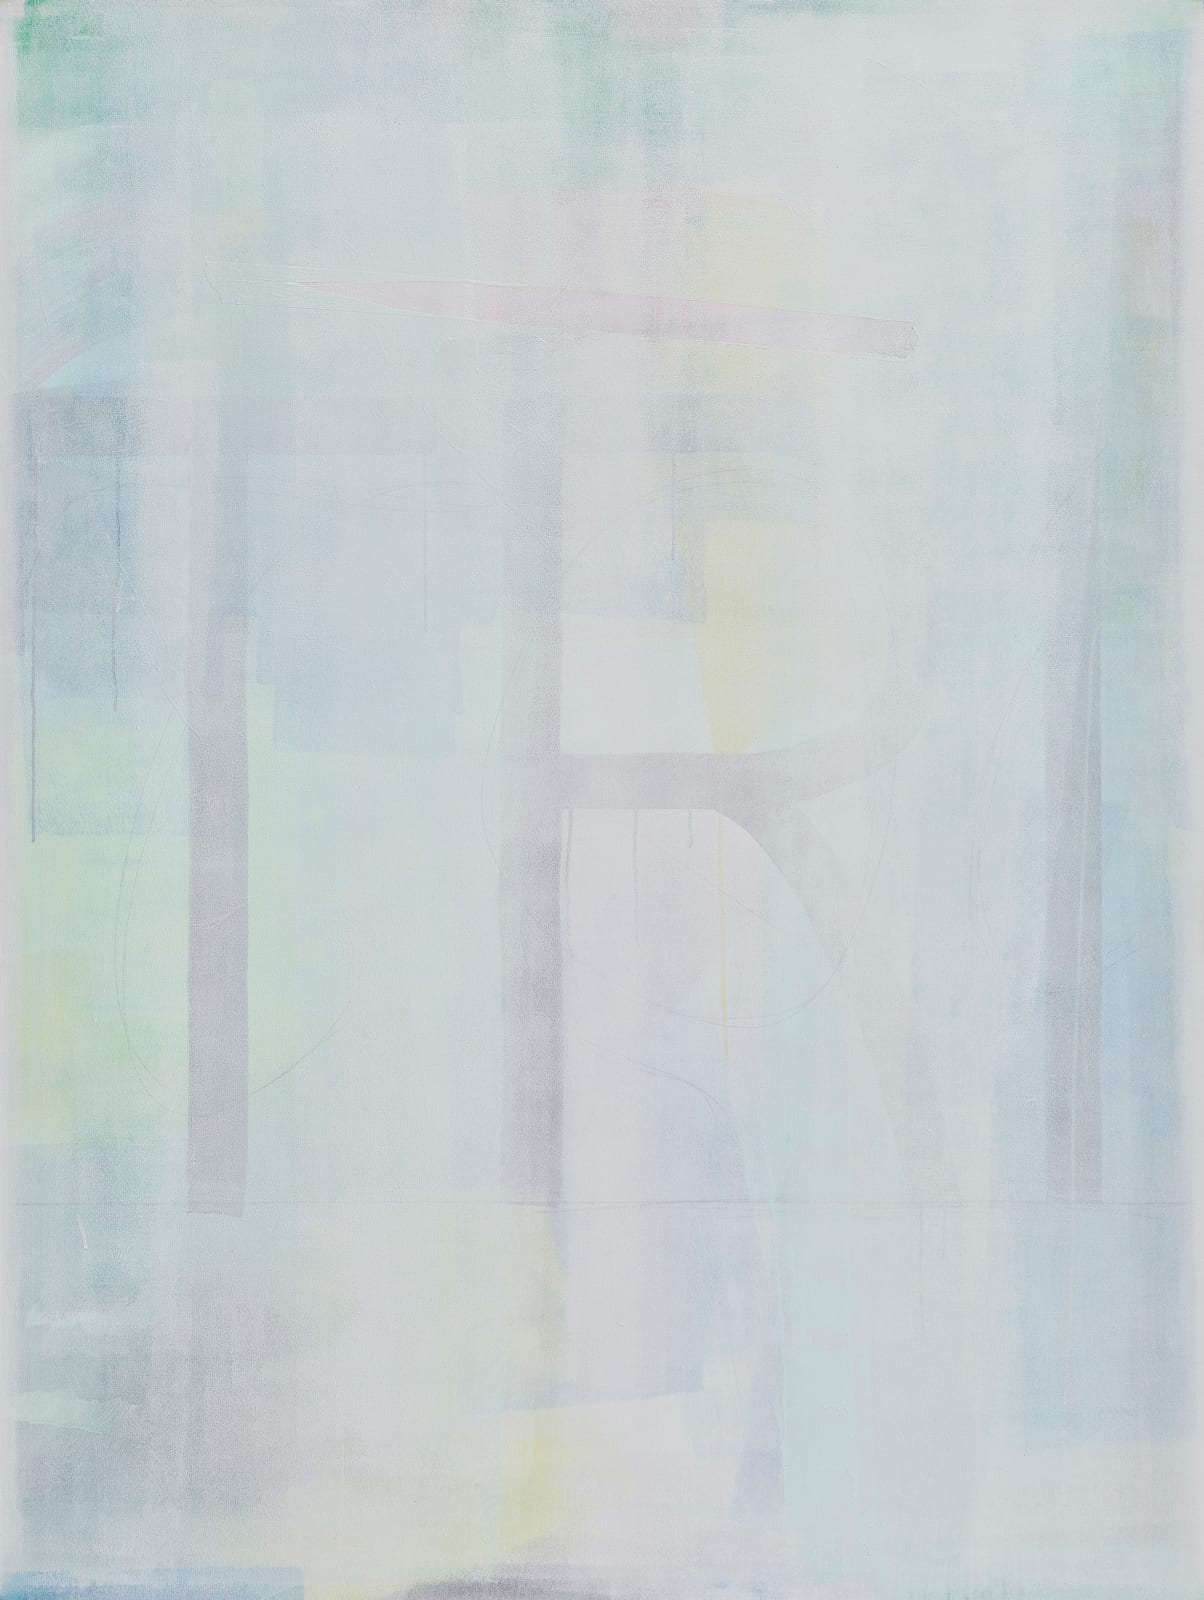 Wang Zhiyuan 王志淵, Untitled Triptych, 2019